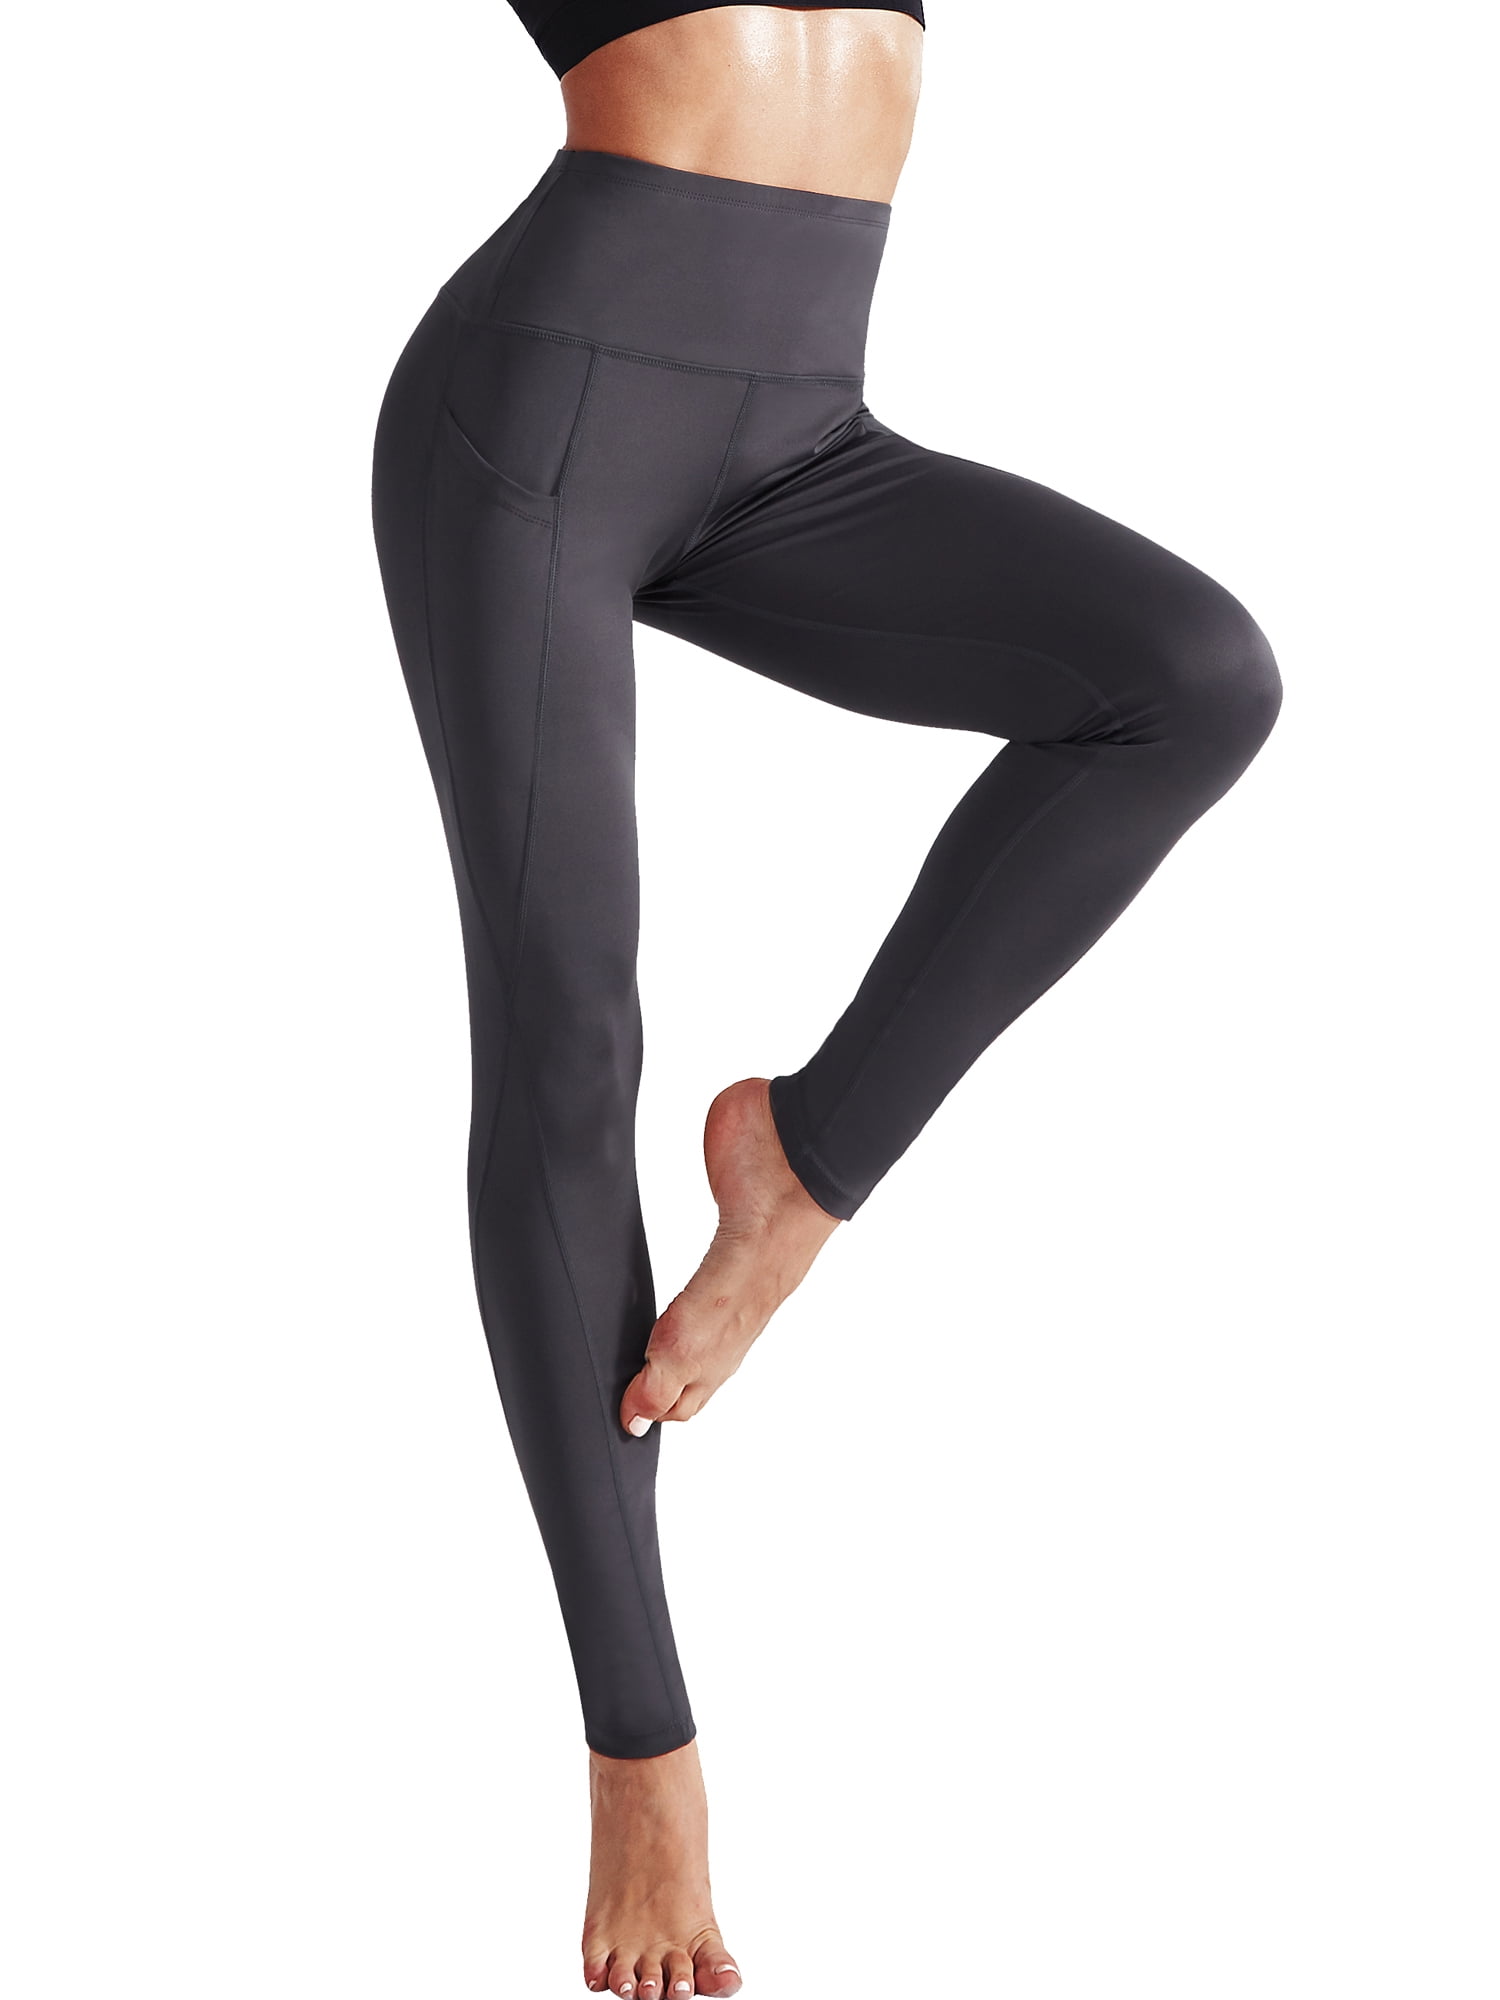 NELEUS Womens High Waist Running Workout Yoga Leggings with Pockets,Black+ Gray+Navy Blue,US Size XL 